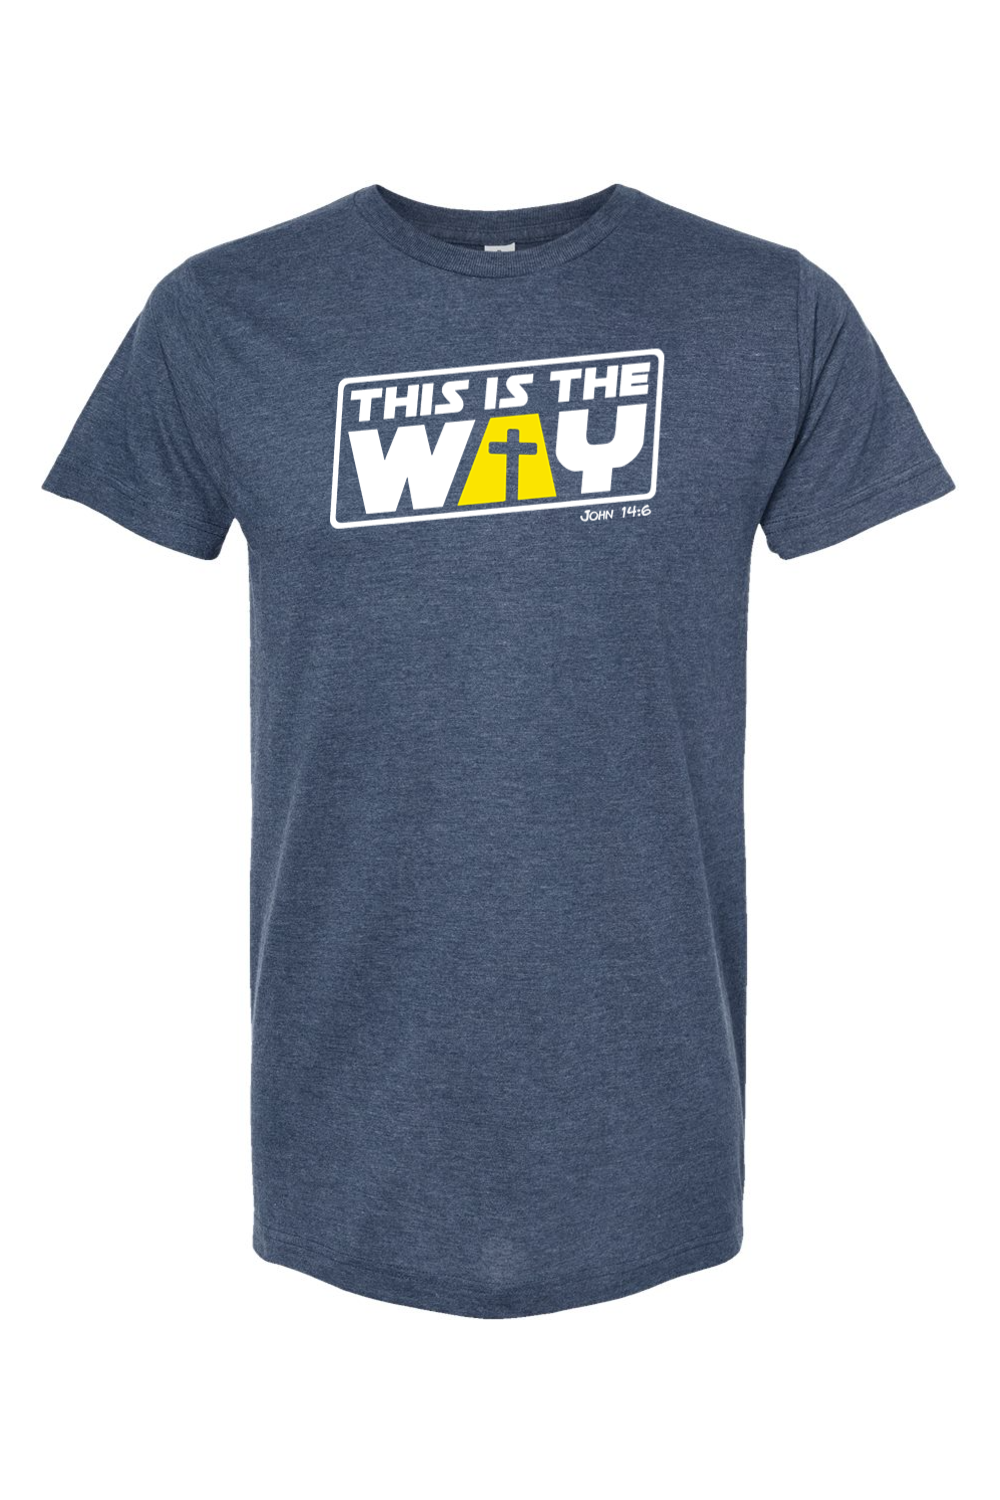 This is the Way (Mandolorian parody)- T-Shirt